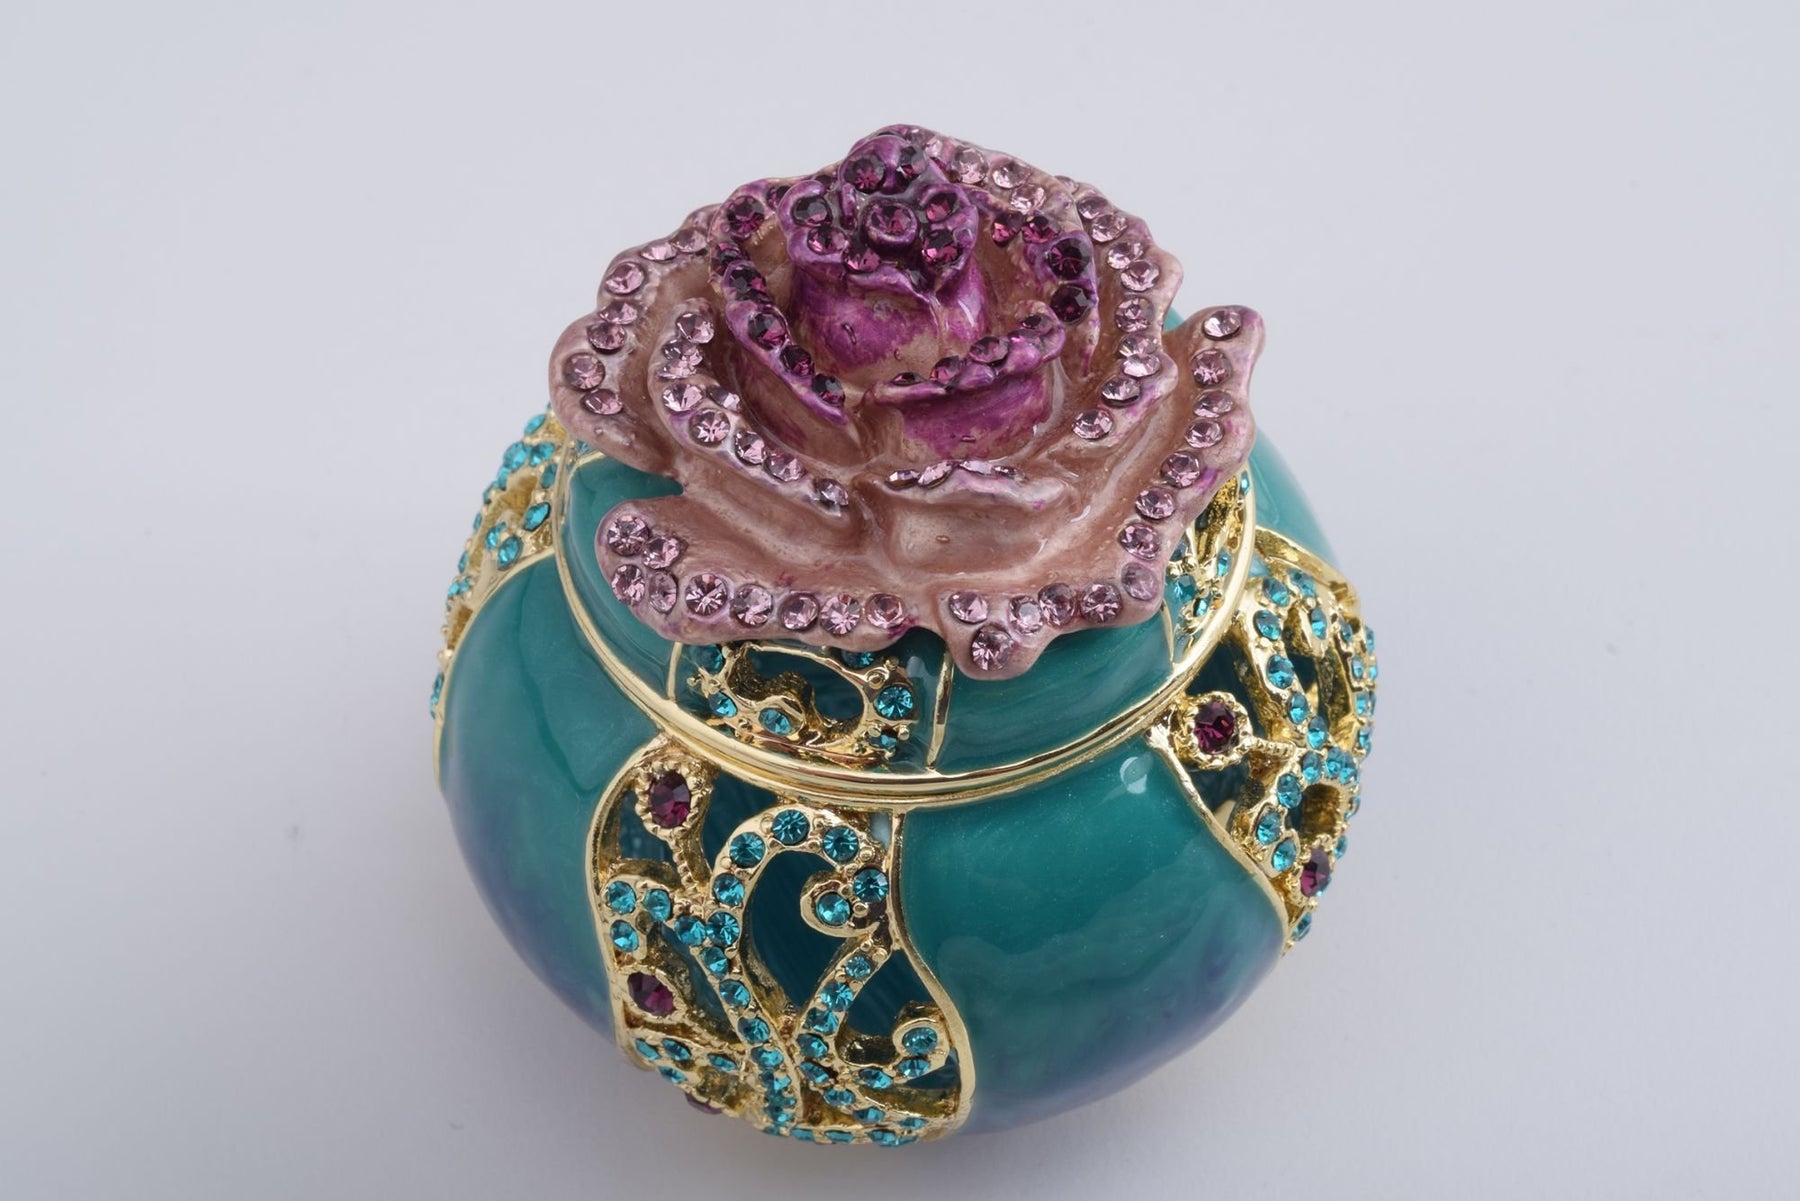 Keren Kopal Purple Flower Vase Box  85.50